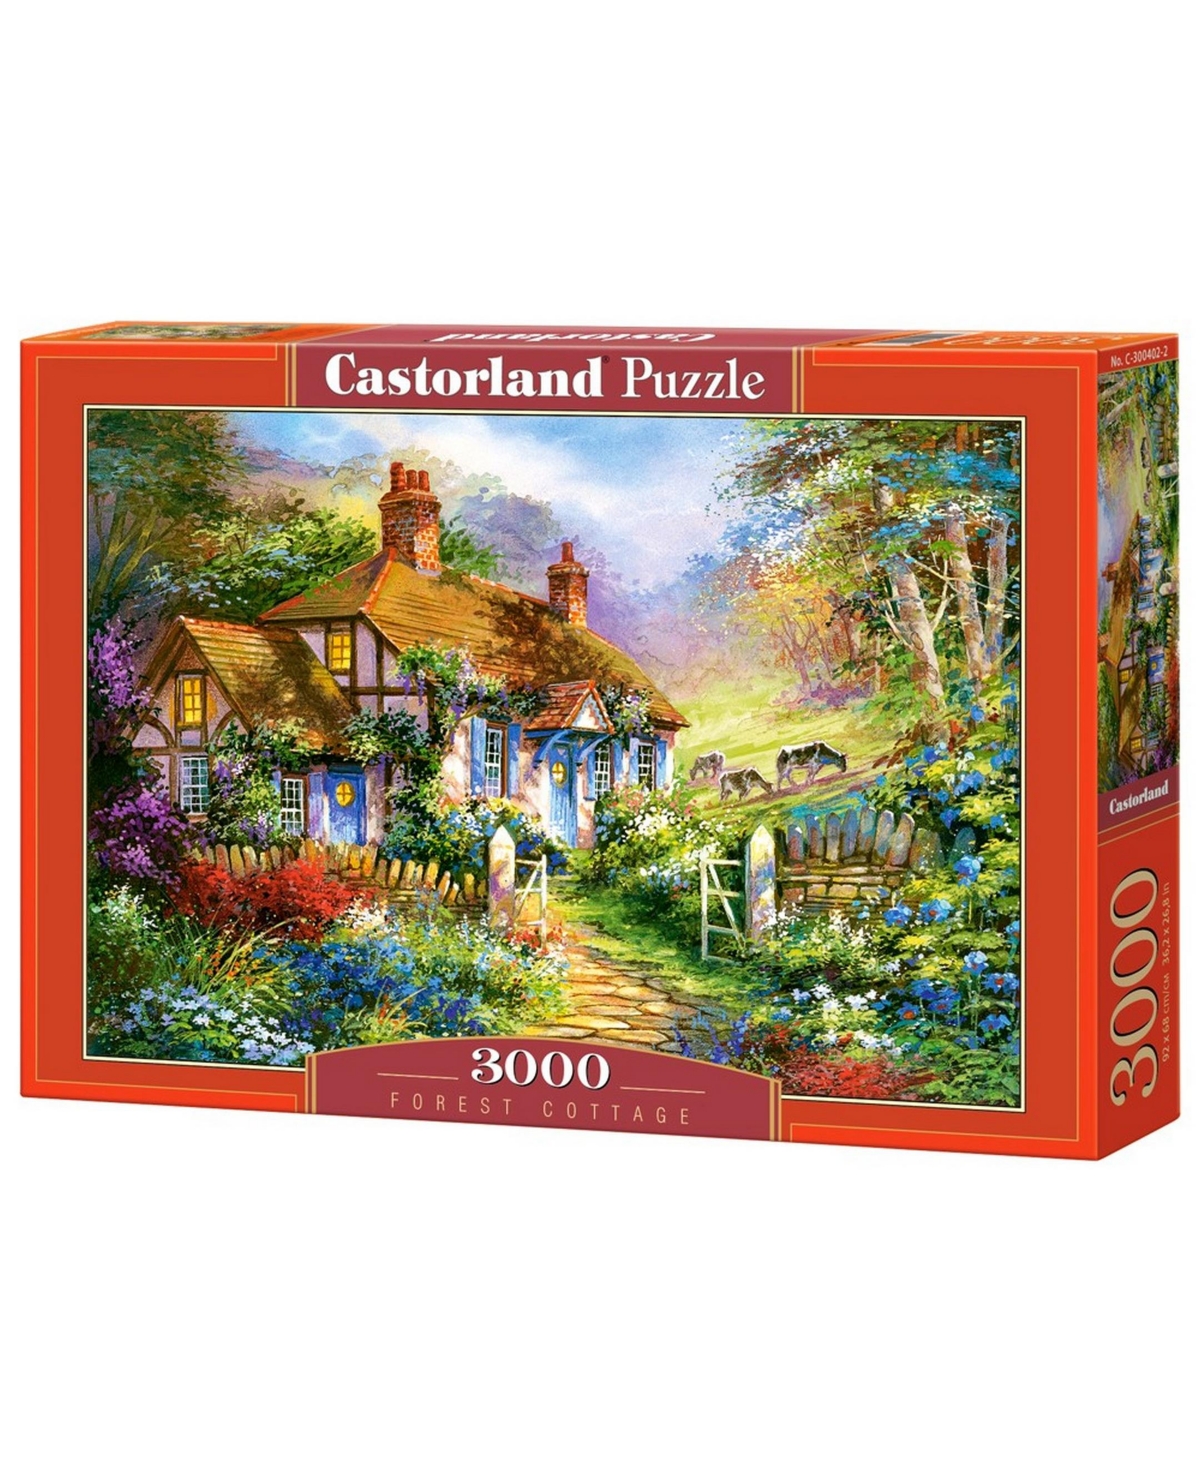 Castorland Kids' Forest Cottage Jigsaw Puzzle Set, 3000 Piece In Multicolor